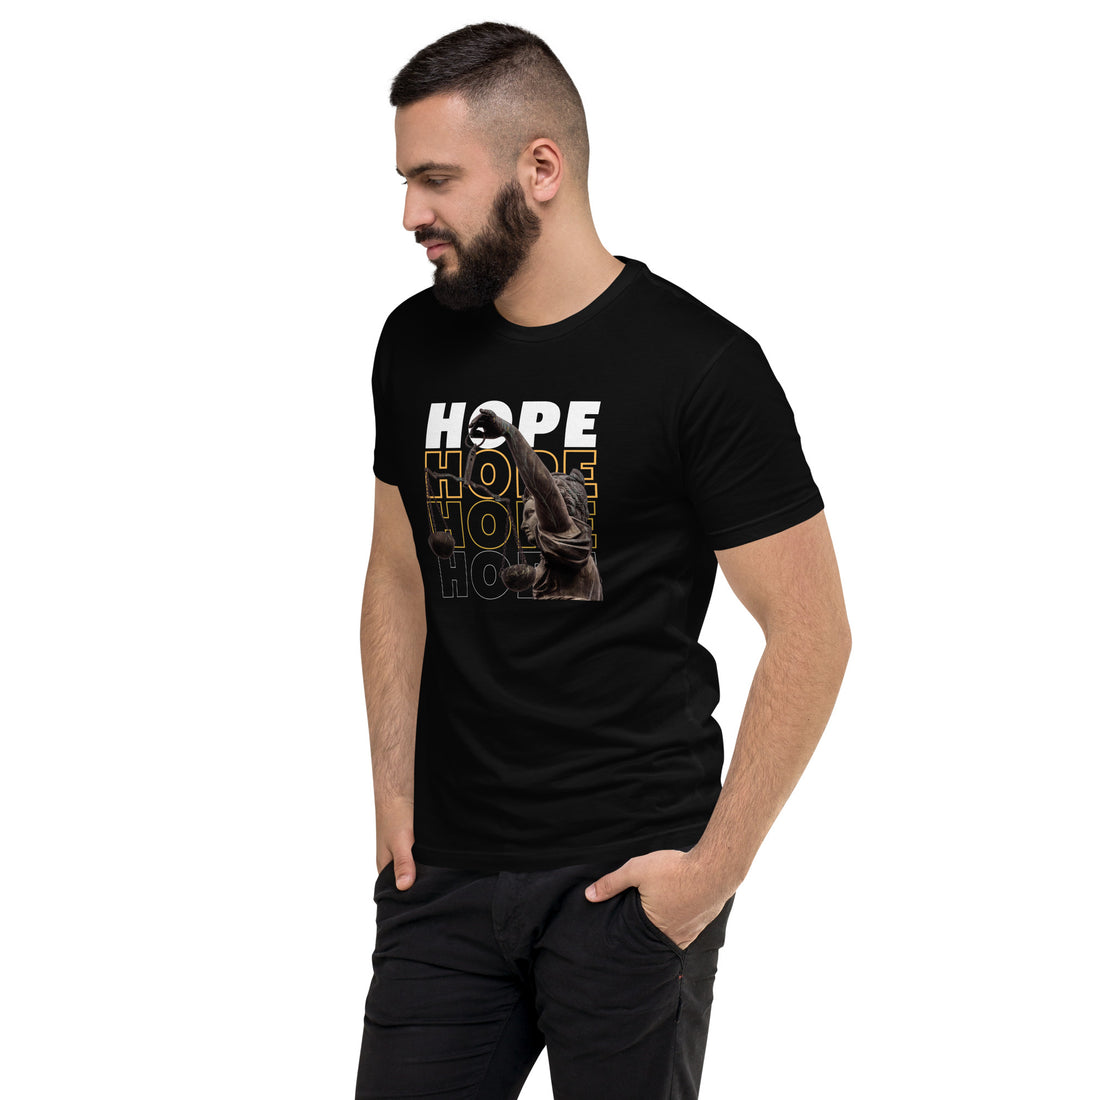 Black and white Hope T-shirt